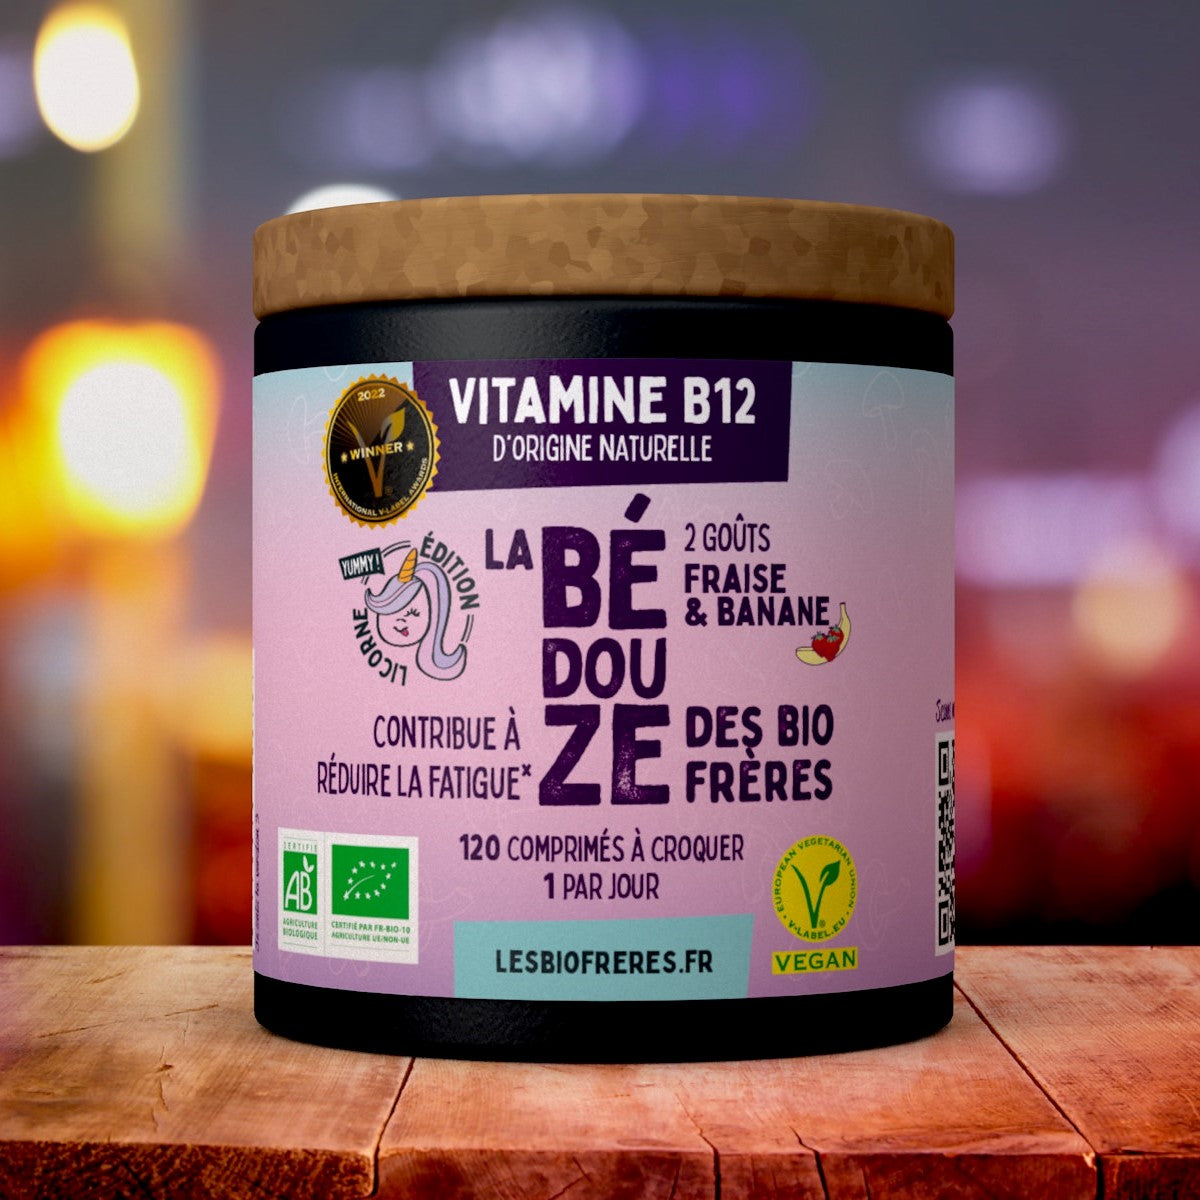 Bédouze - Vitamine B12 - Goût banane fraise - 120 comprimés